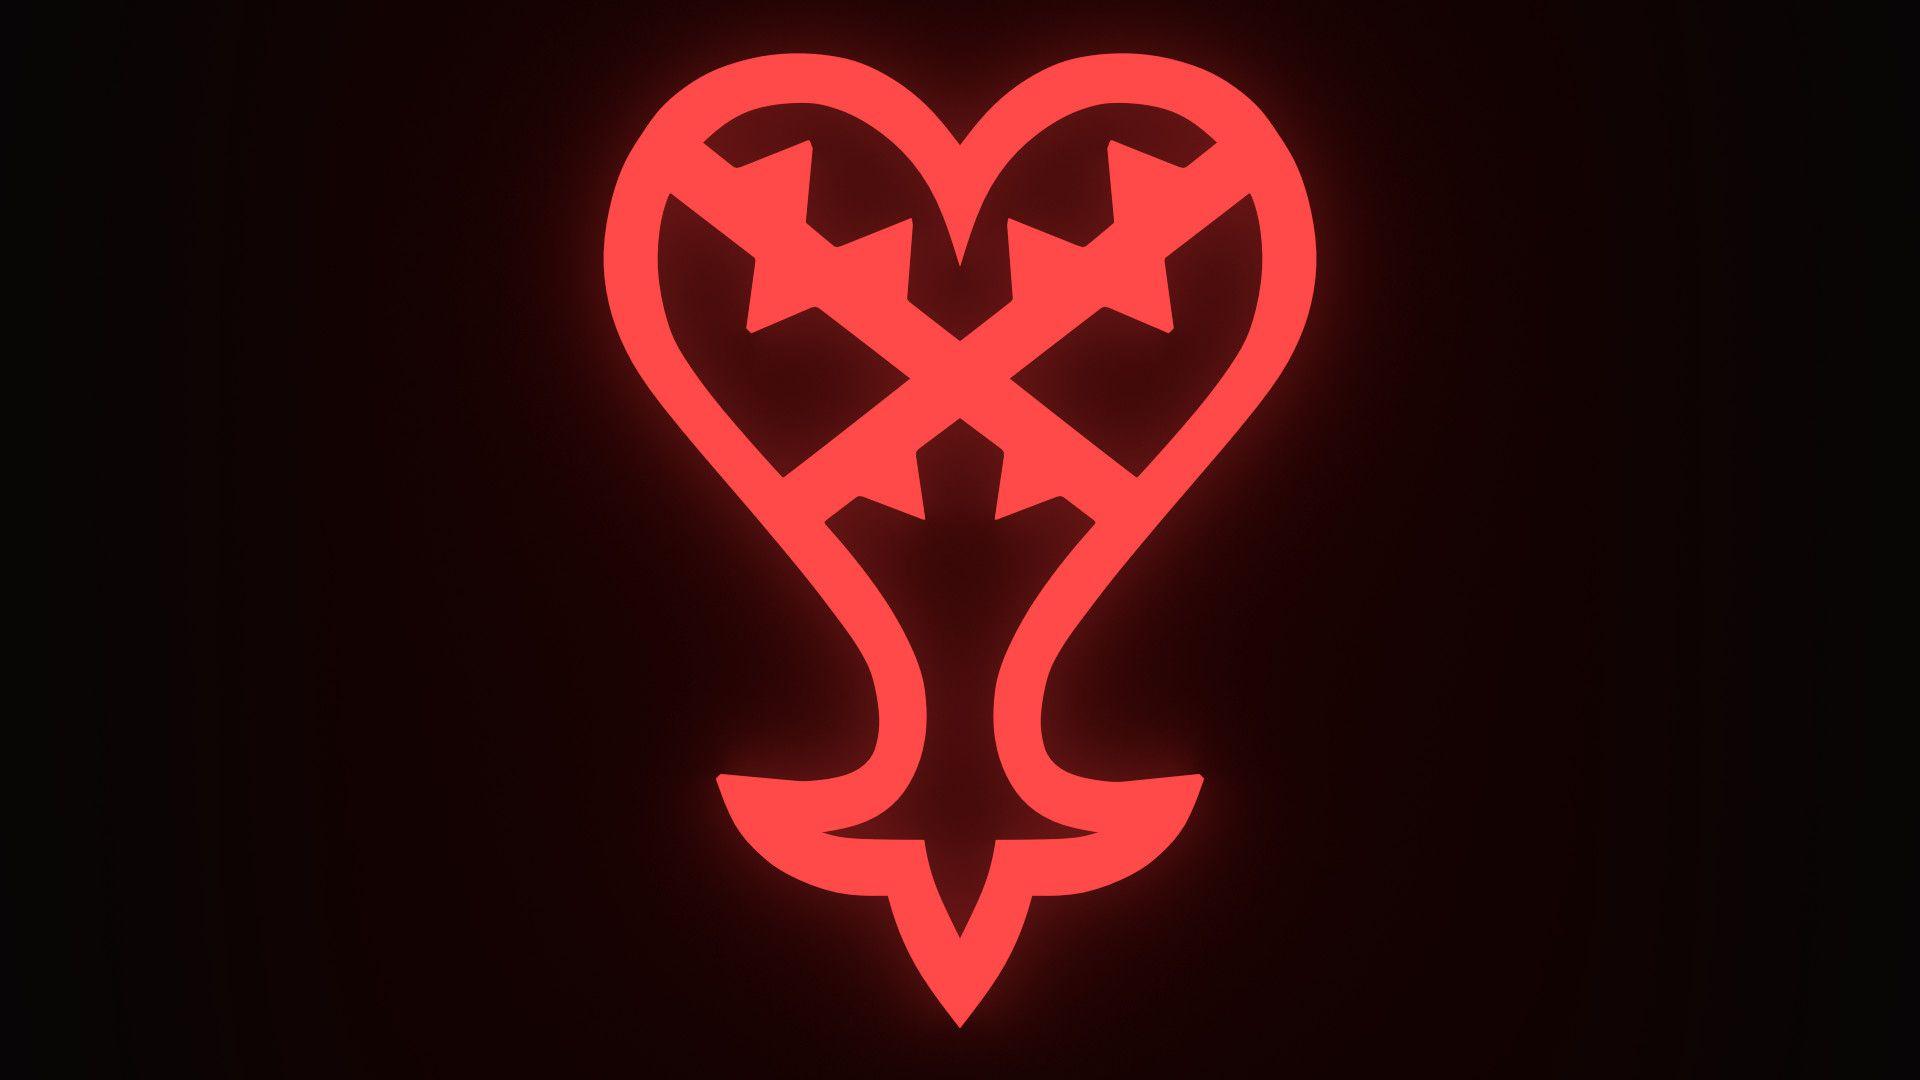 Kingdom Hearts Heartless Wallpapers.